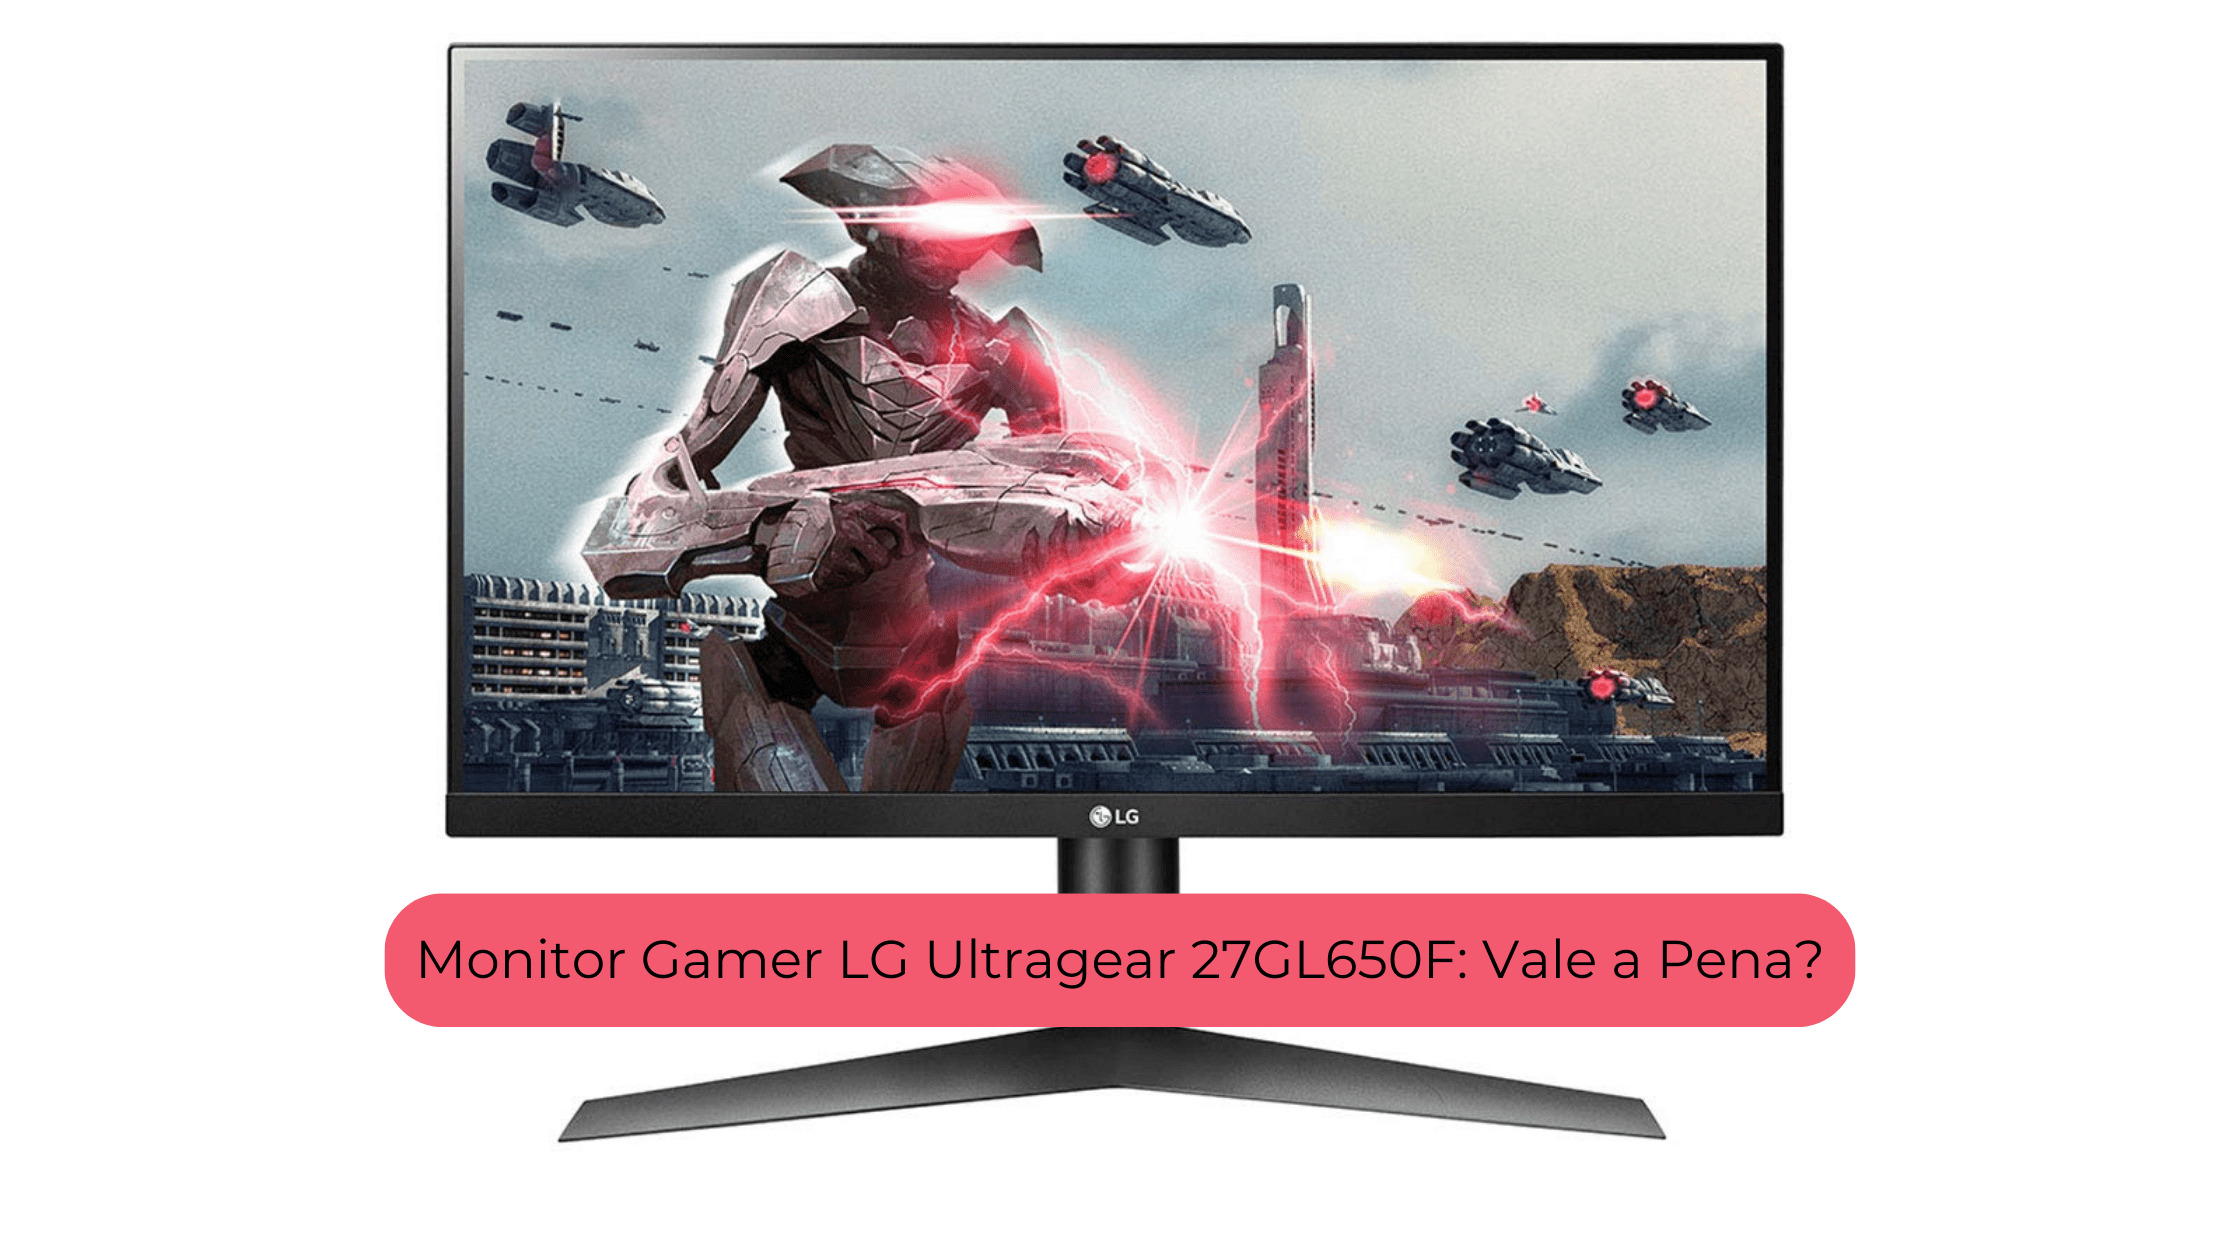 Monitor Gamer LG Ultragear 27GL650F: Vale a Pena?